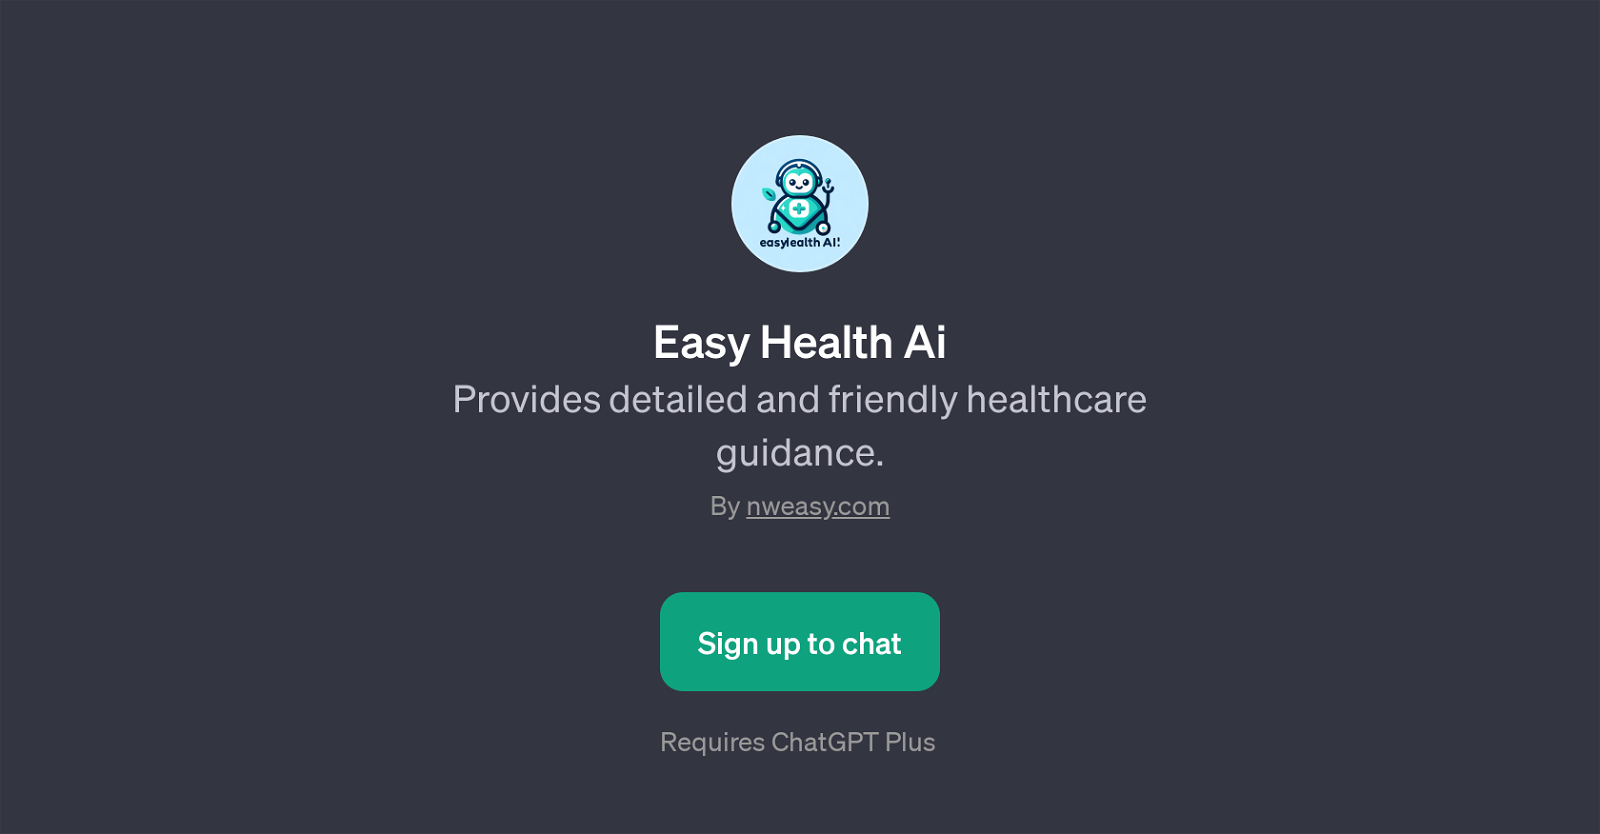 Easy Health Ai website